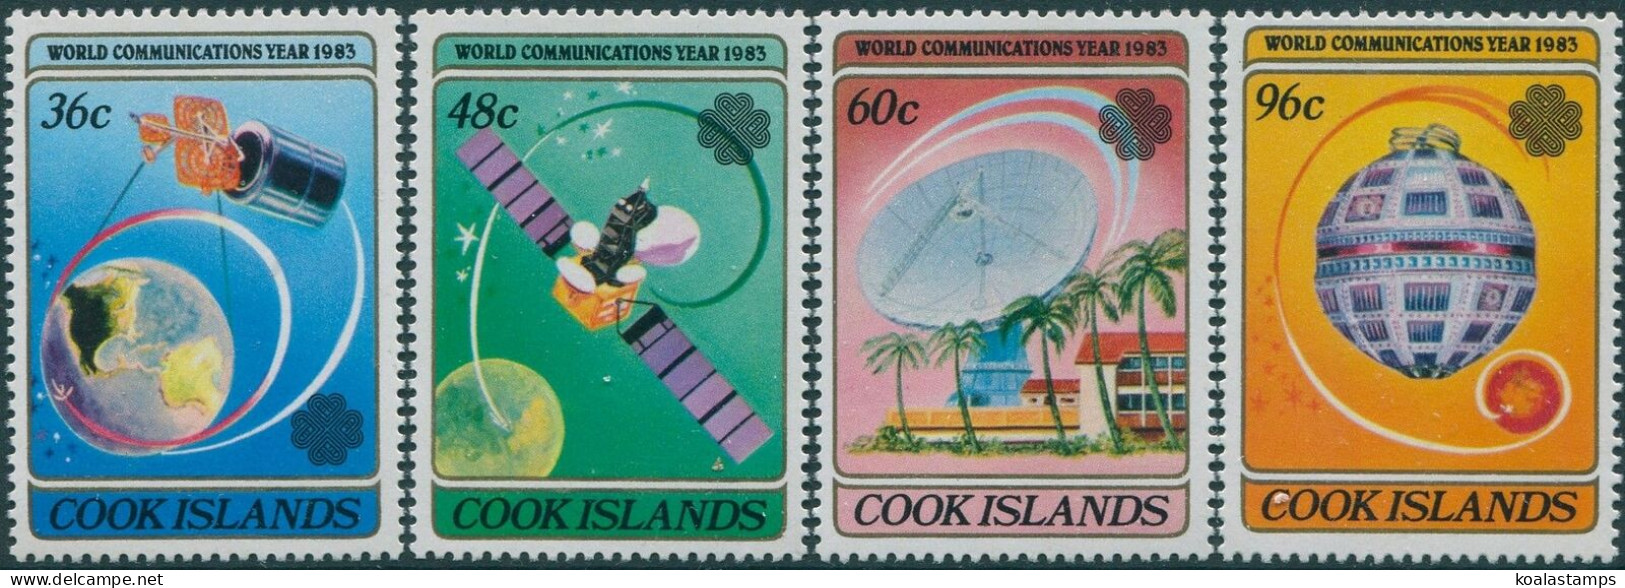 Cook Islands 1983 SG927-930 World Communications Set MNH - Cook